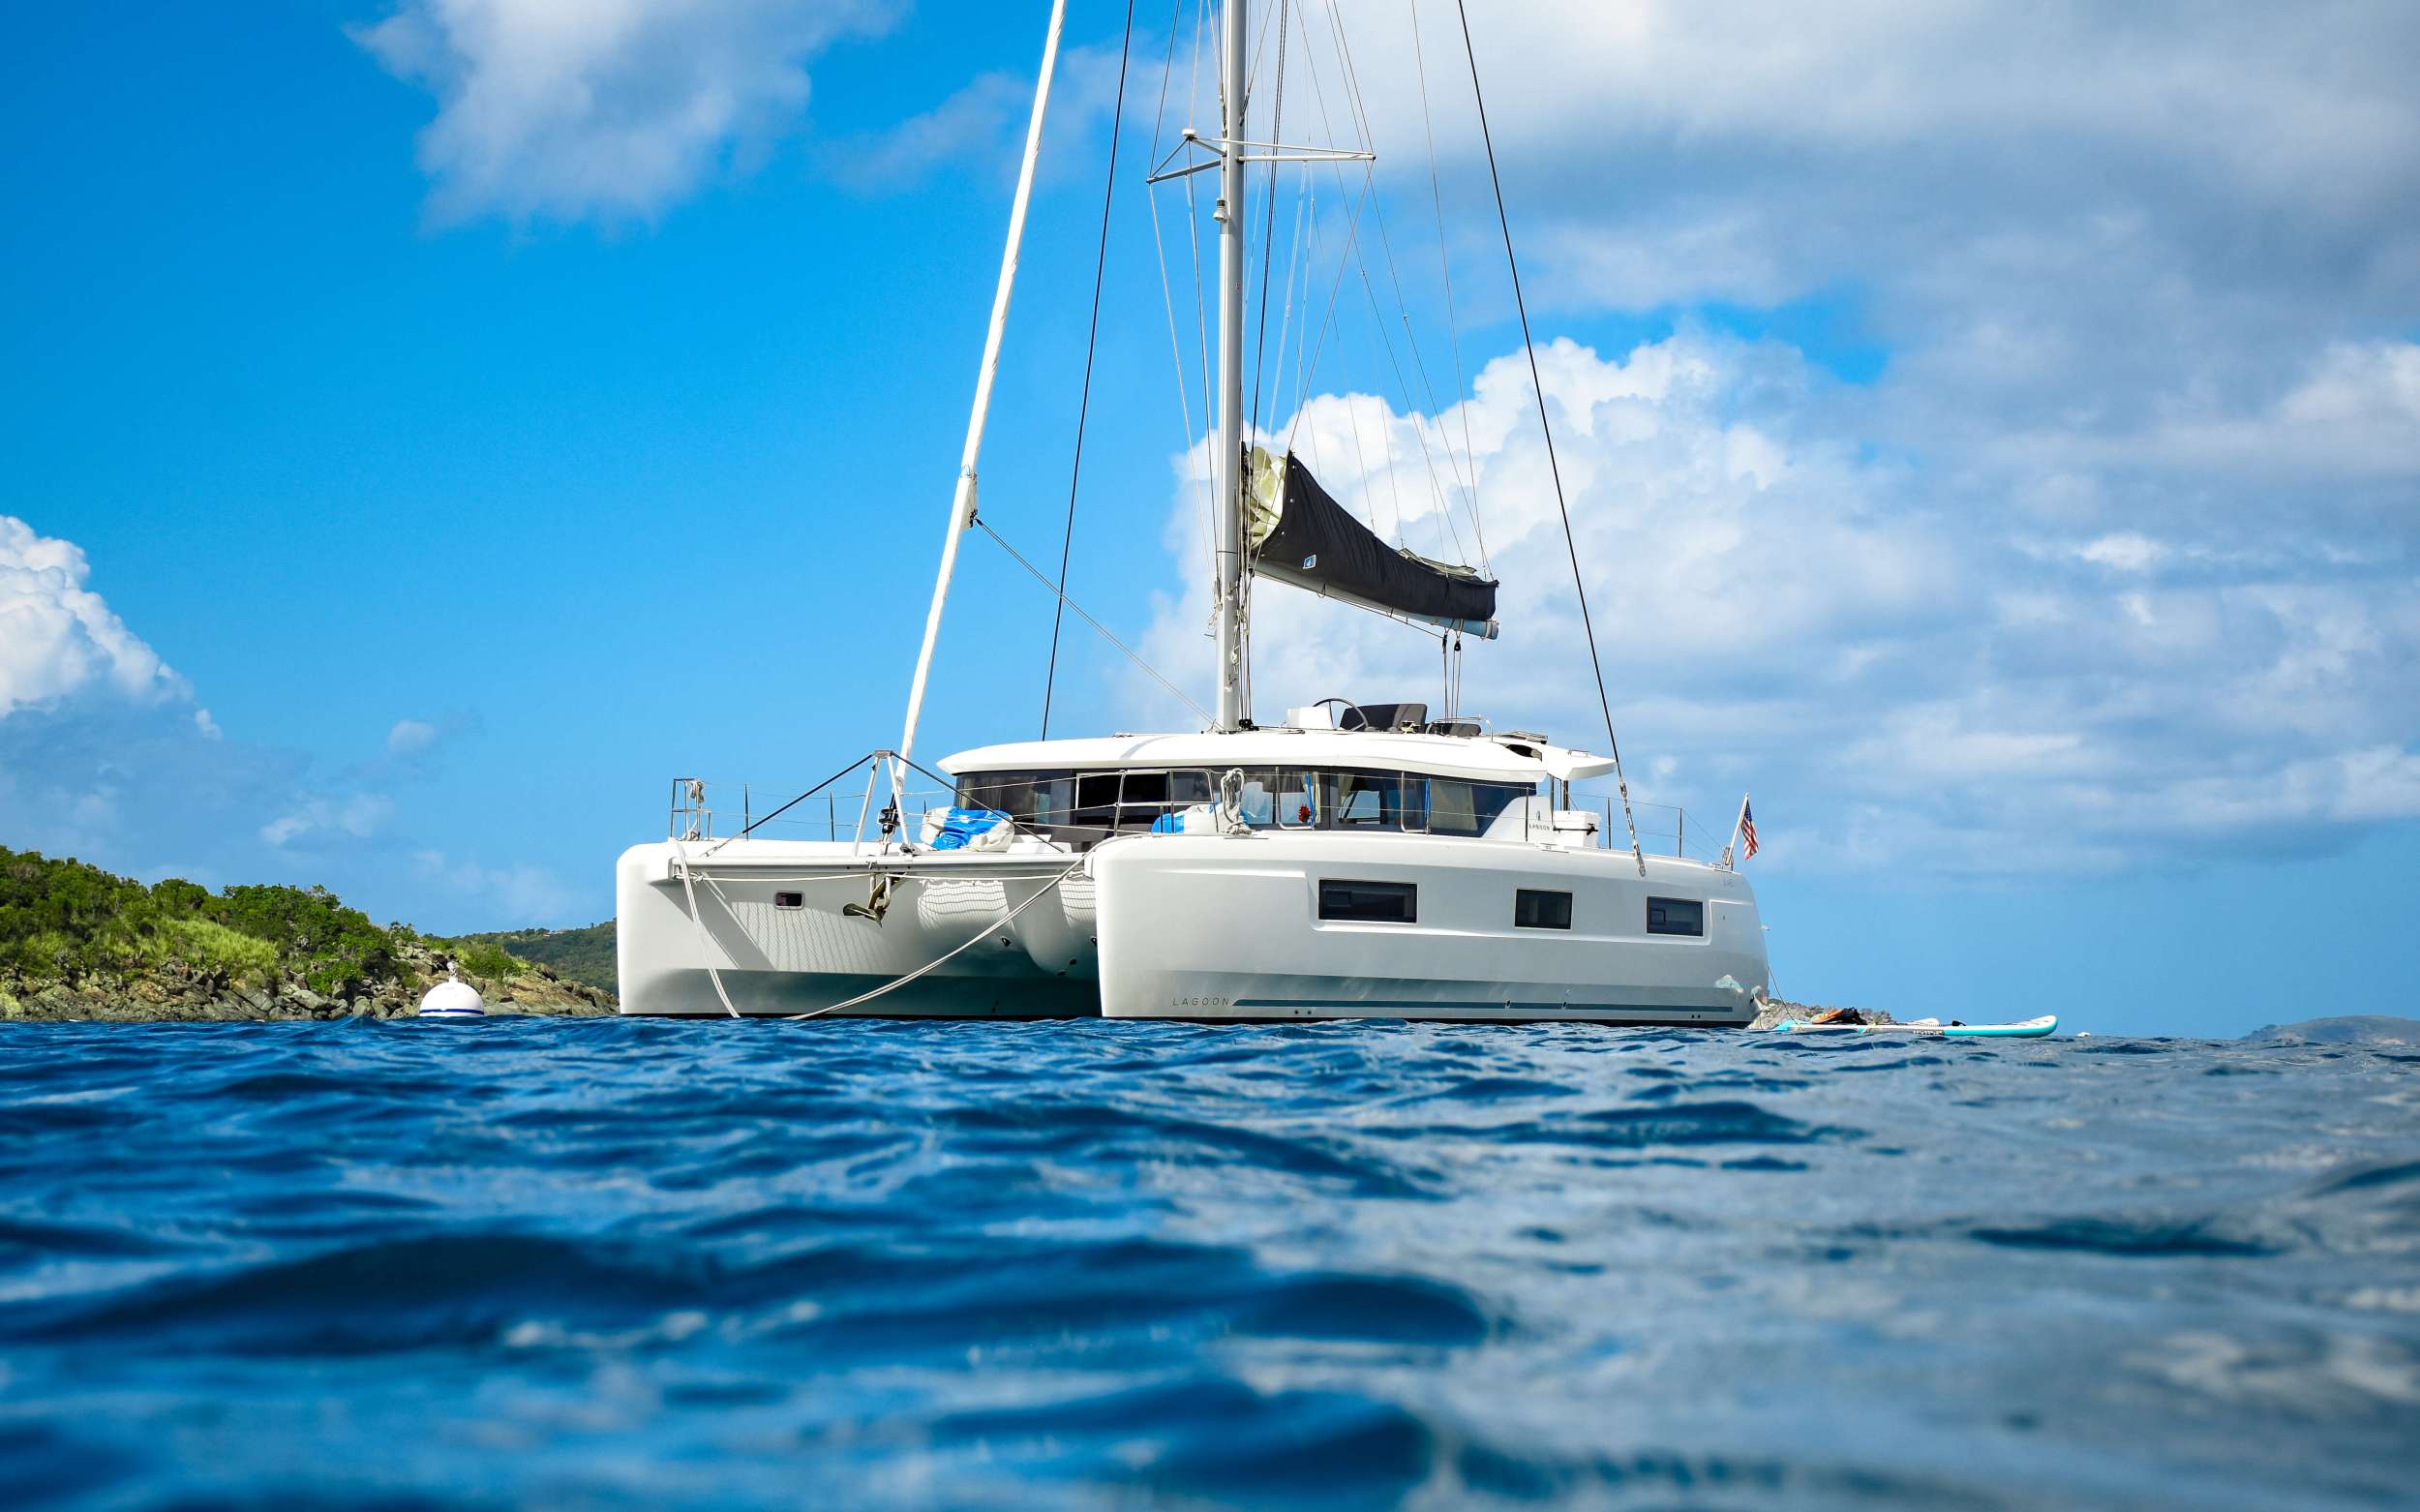 CELAVIE - Luxury yacht charter St Martin & Boat hire in Caribbean 2